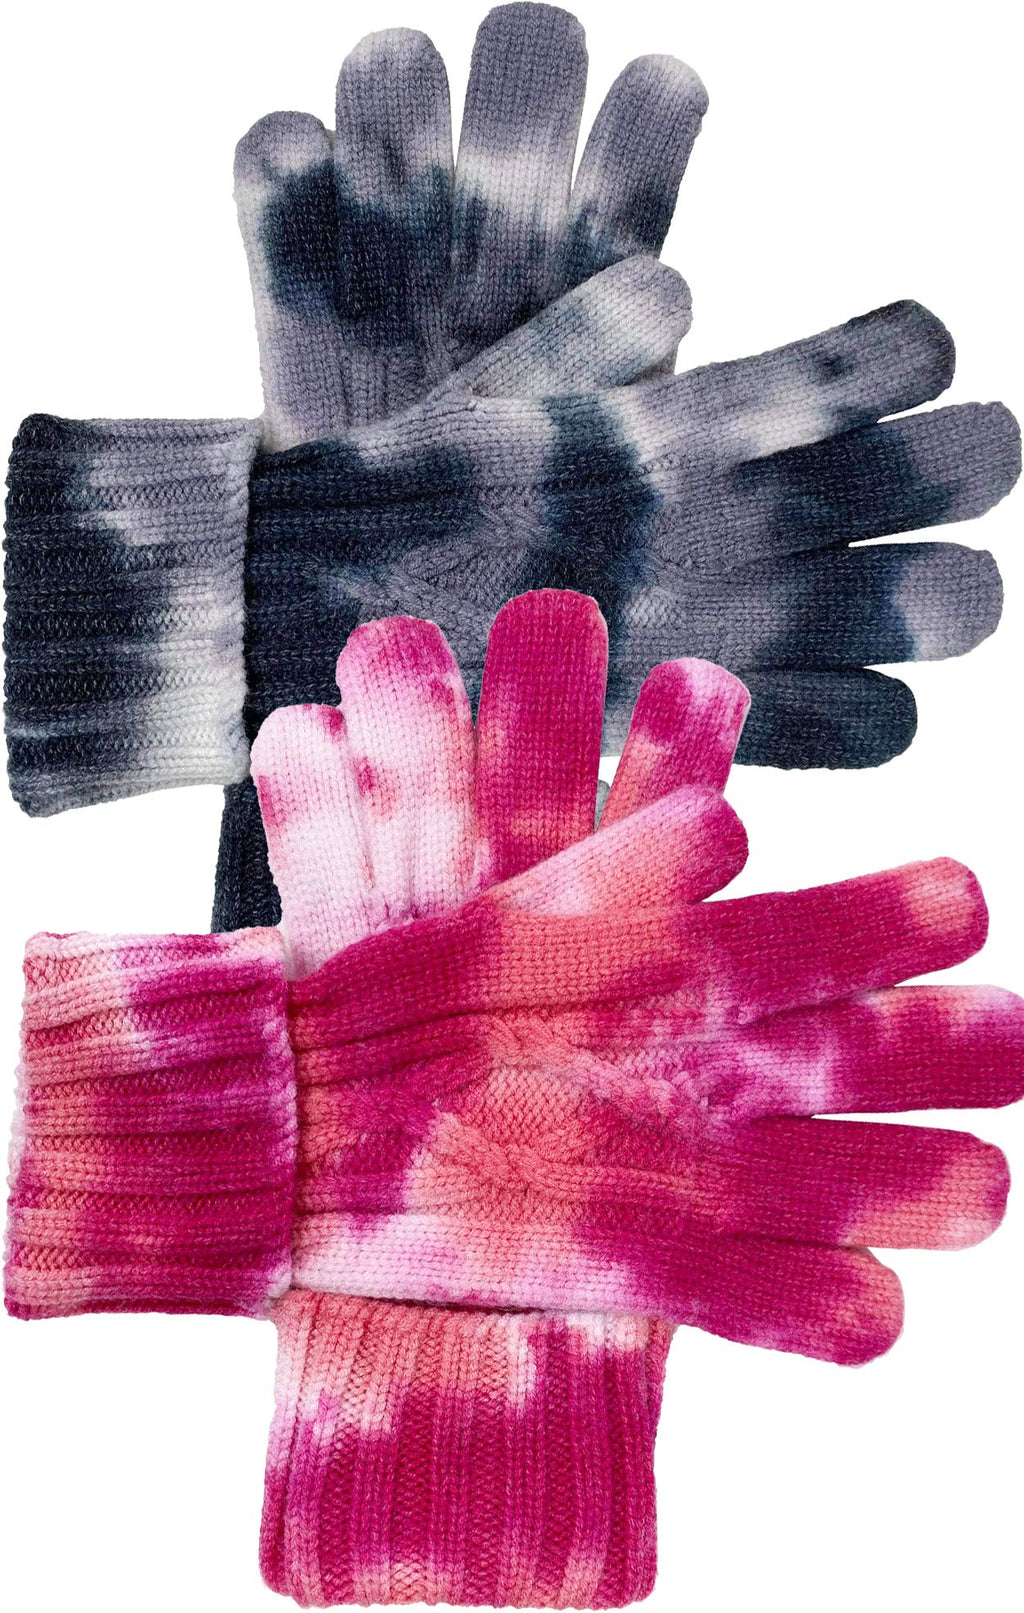 [Australia] - Funky Junque’s Women’s Tie Dye Winter Warm Cable Knit Gloves Mitten 2 Pack - Tie Dye- Fuchsia/Pink & Grey/Charcoal 